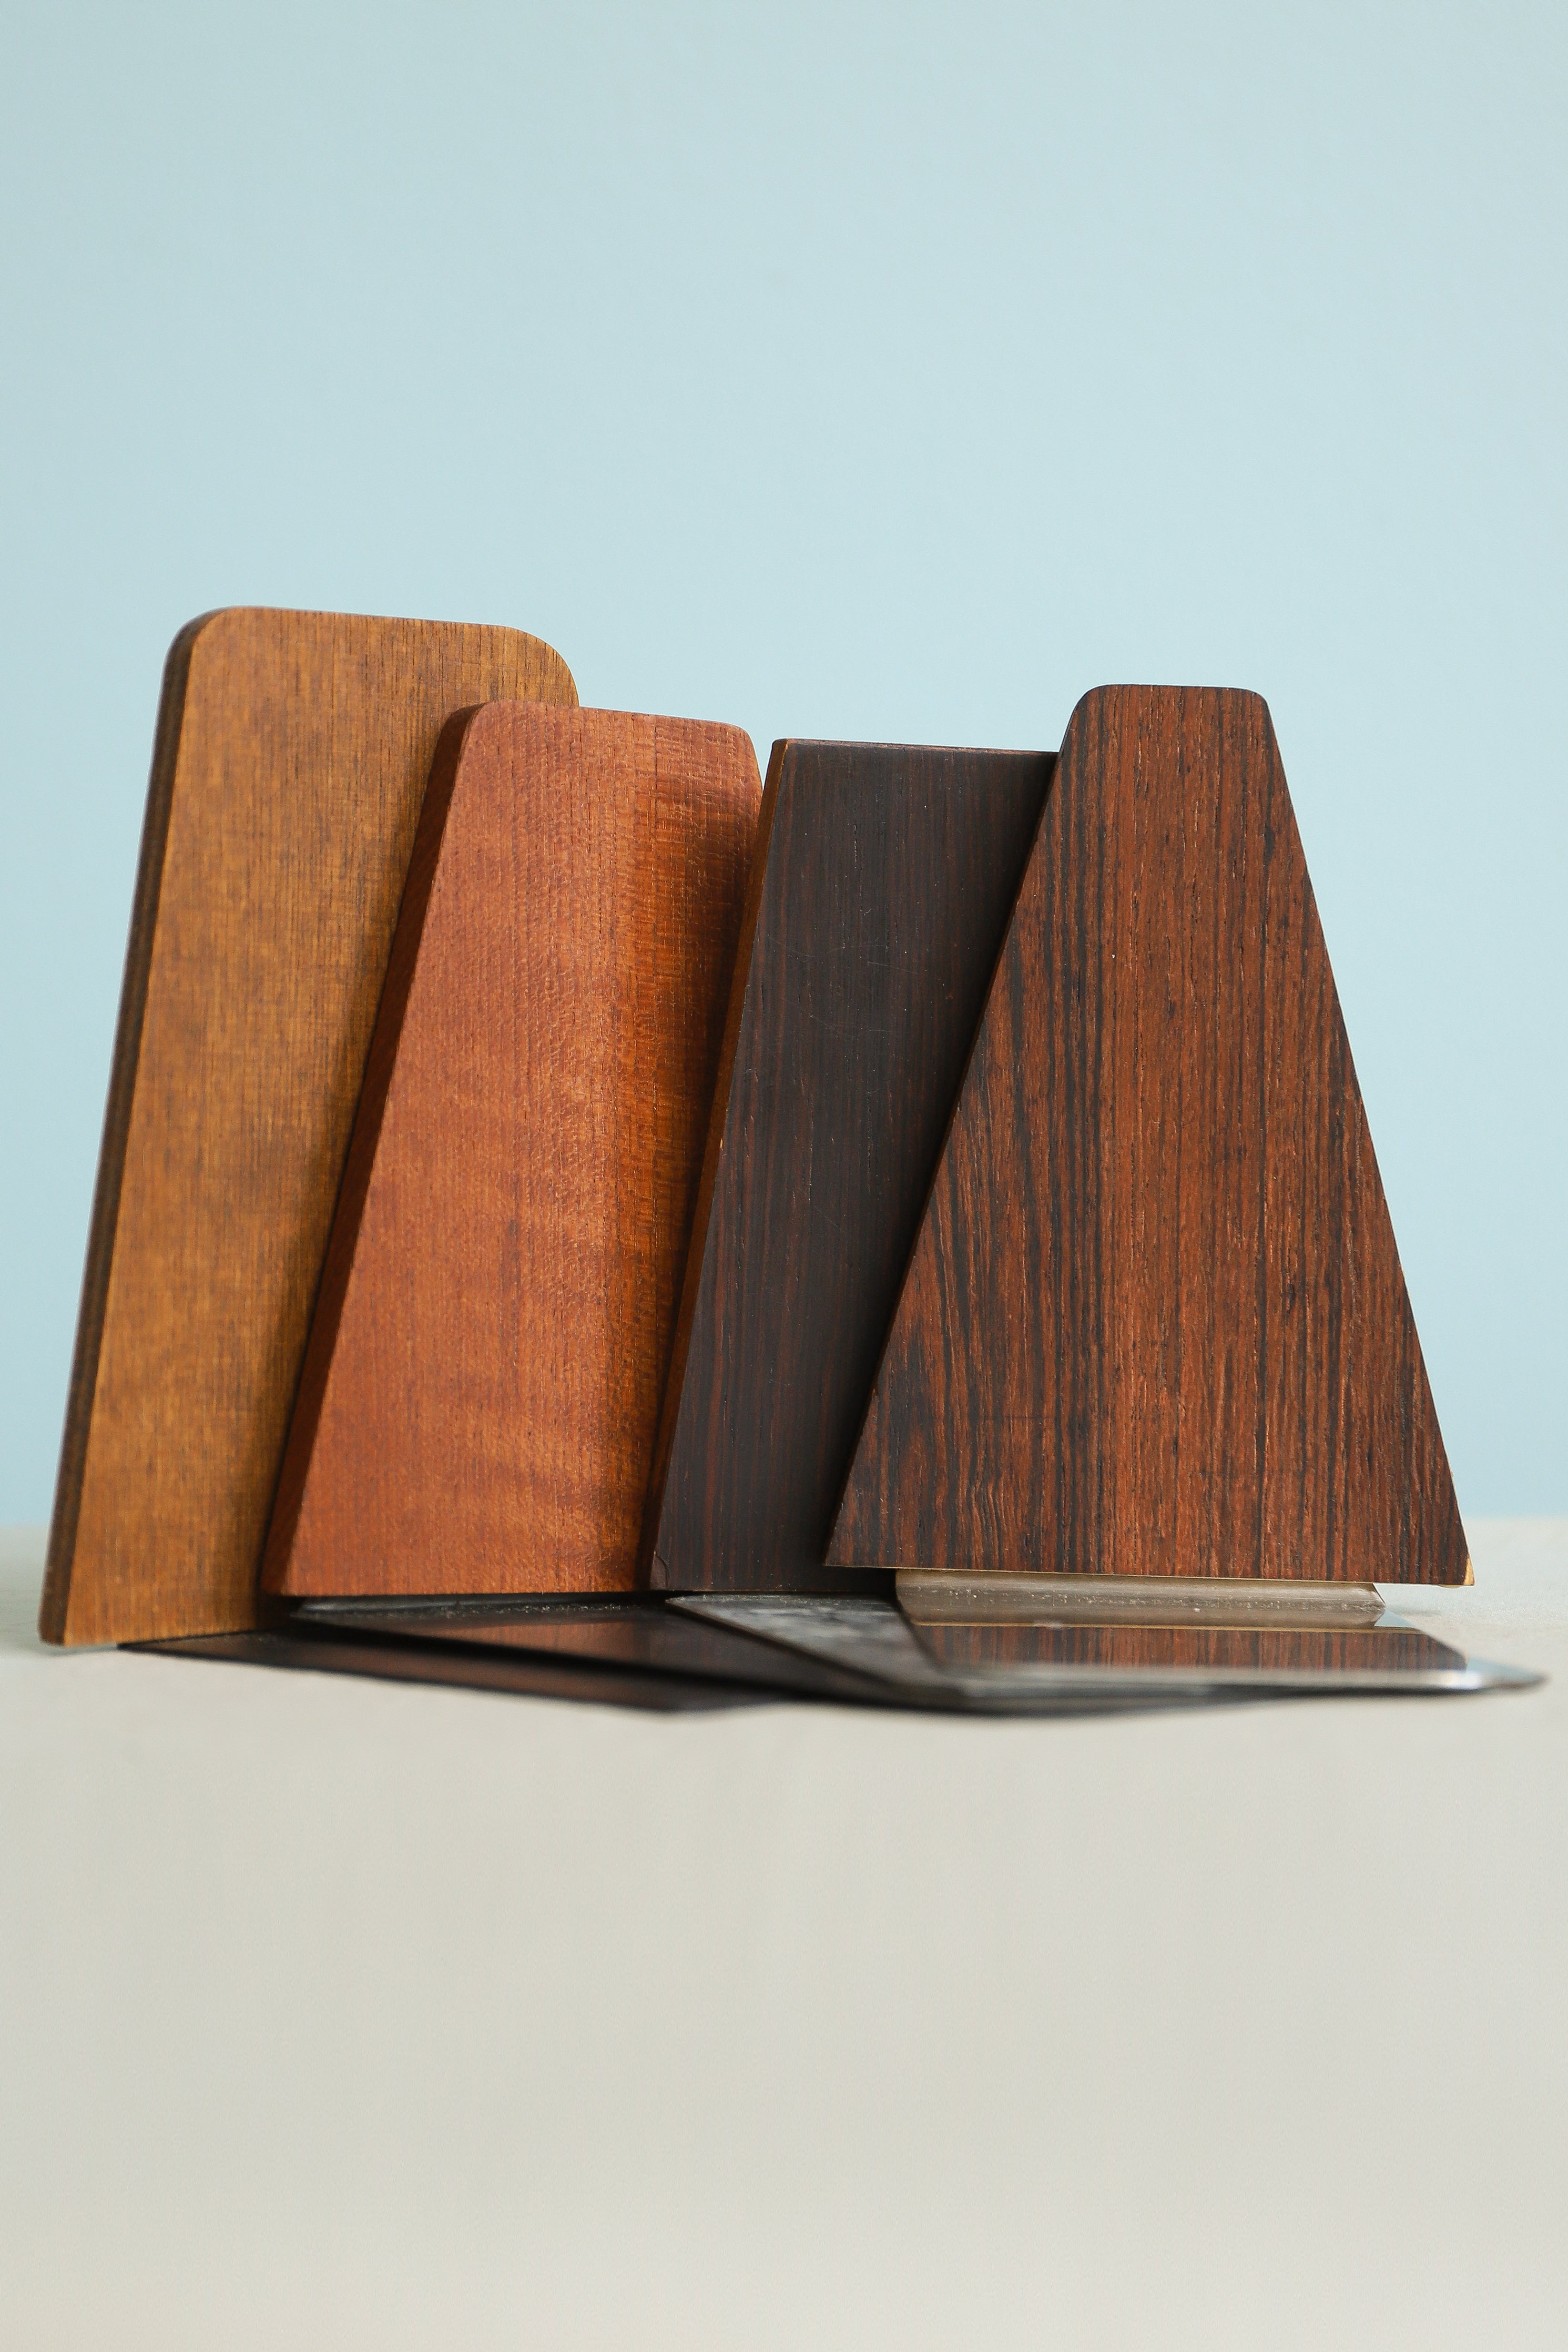 Wooden Bookend Danish Vintage/デンマークヴィンテージ ブックエンド 本立て チーク材 ローズウッド材 オーク材 北欧インテリア